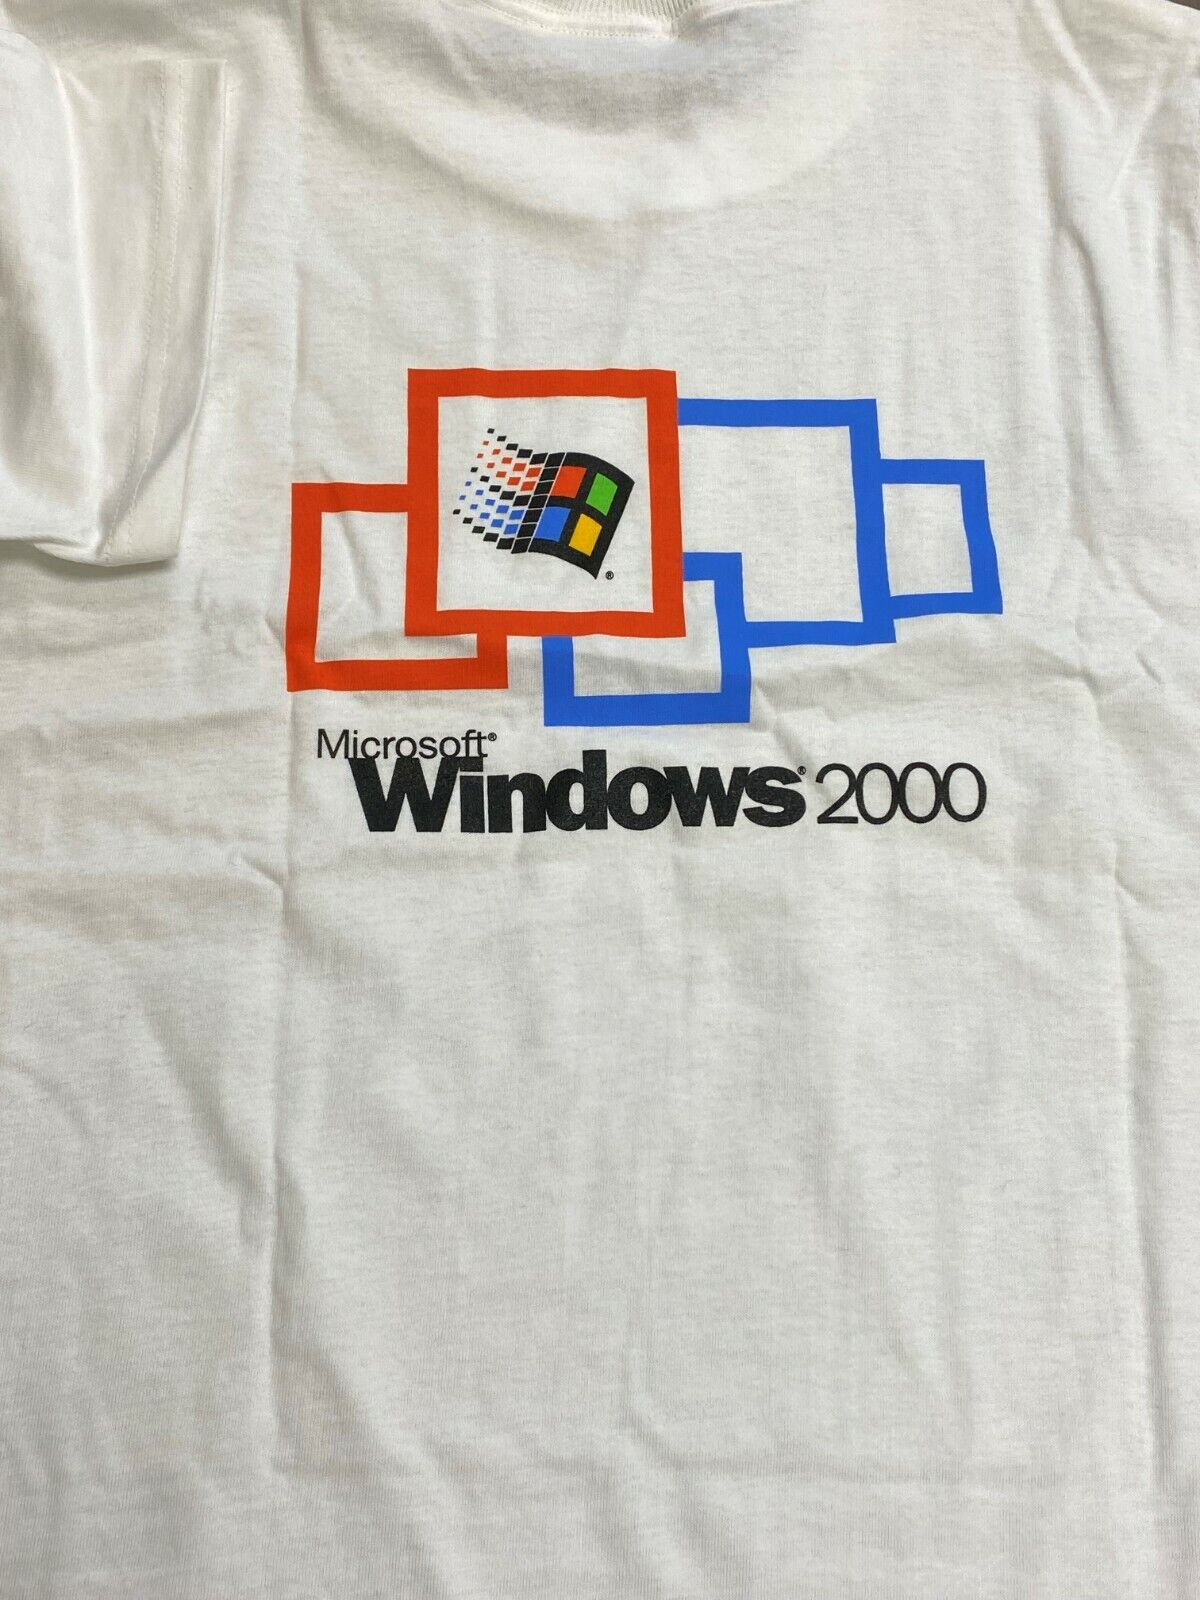 Vintage T-Shirt MICROSOFT Windows 2000 Brand New White 100% Cotton Size S